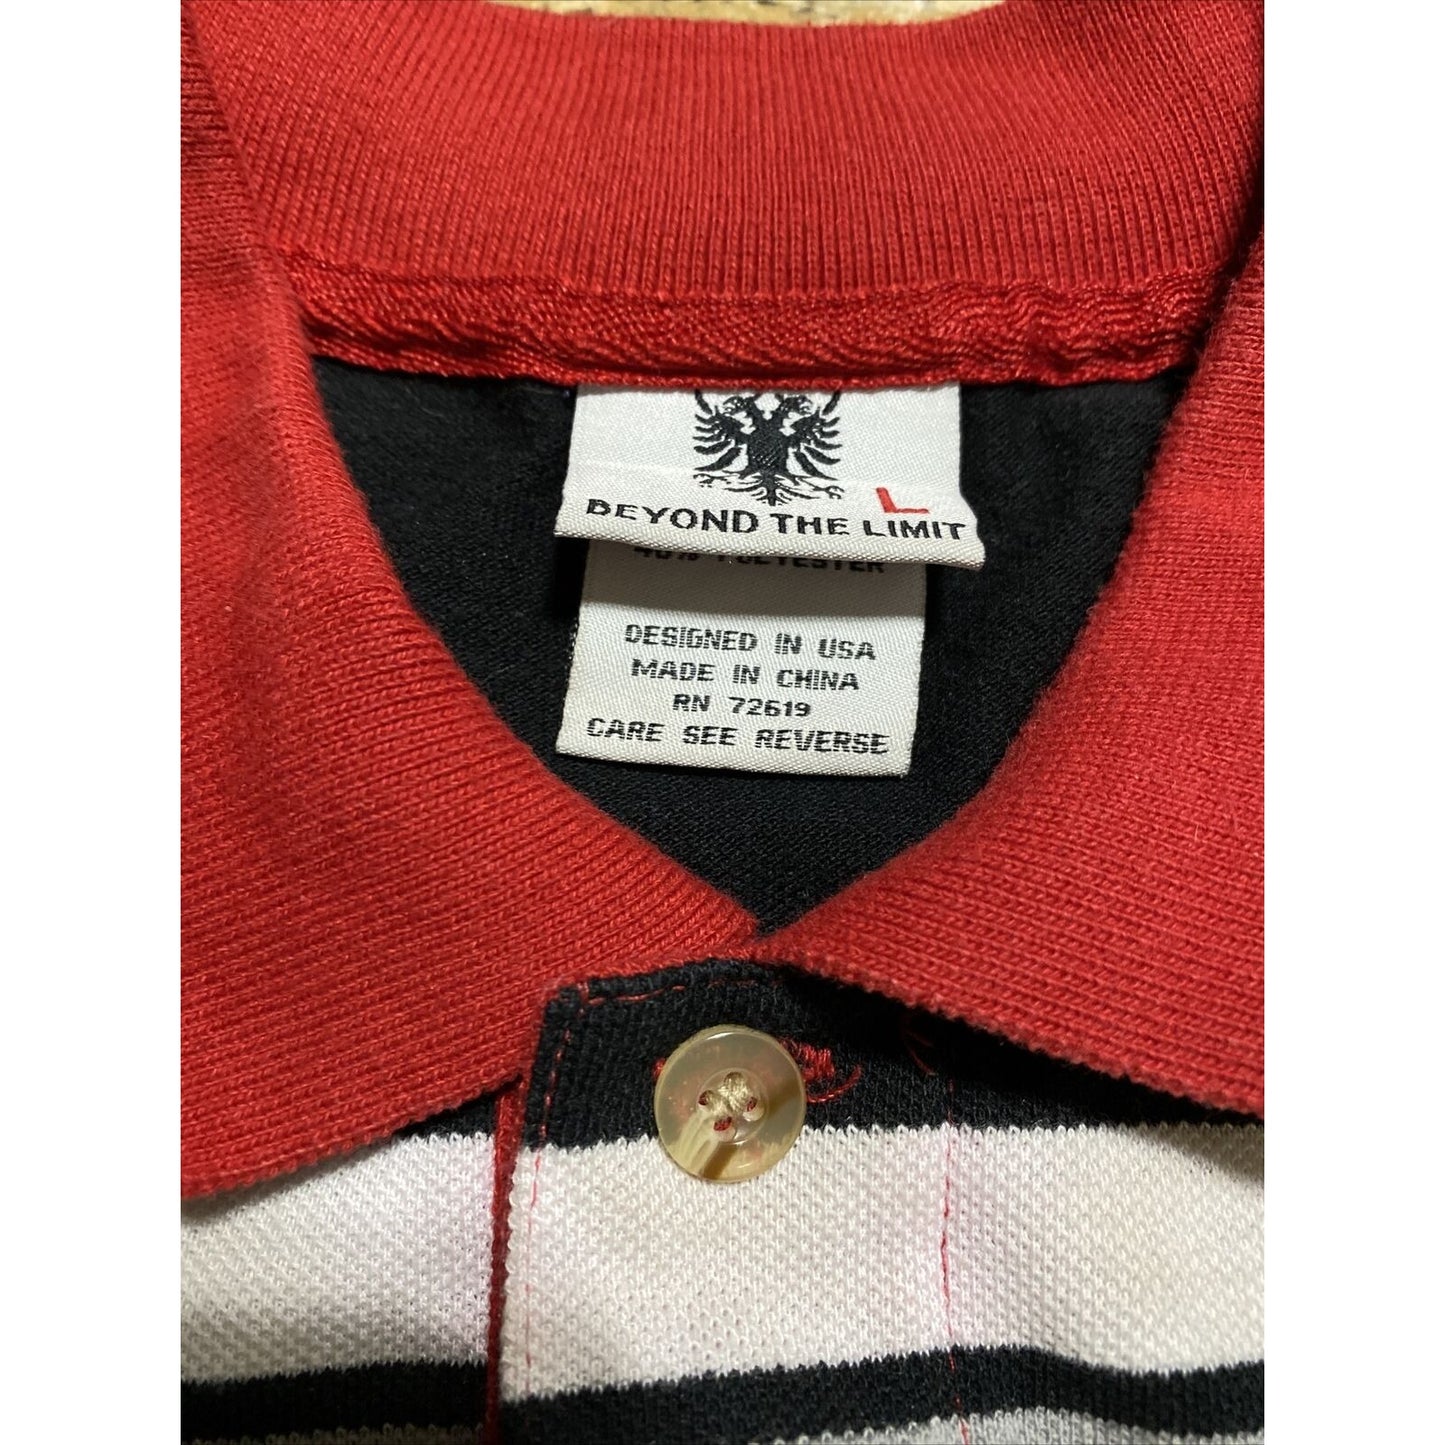 Beyond the Limit Men’s Large Red White & Black Stripes Cotton Blend Polo Shirt